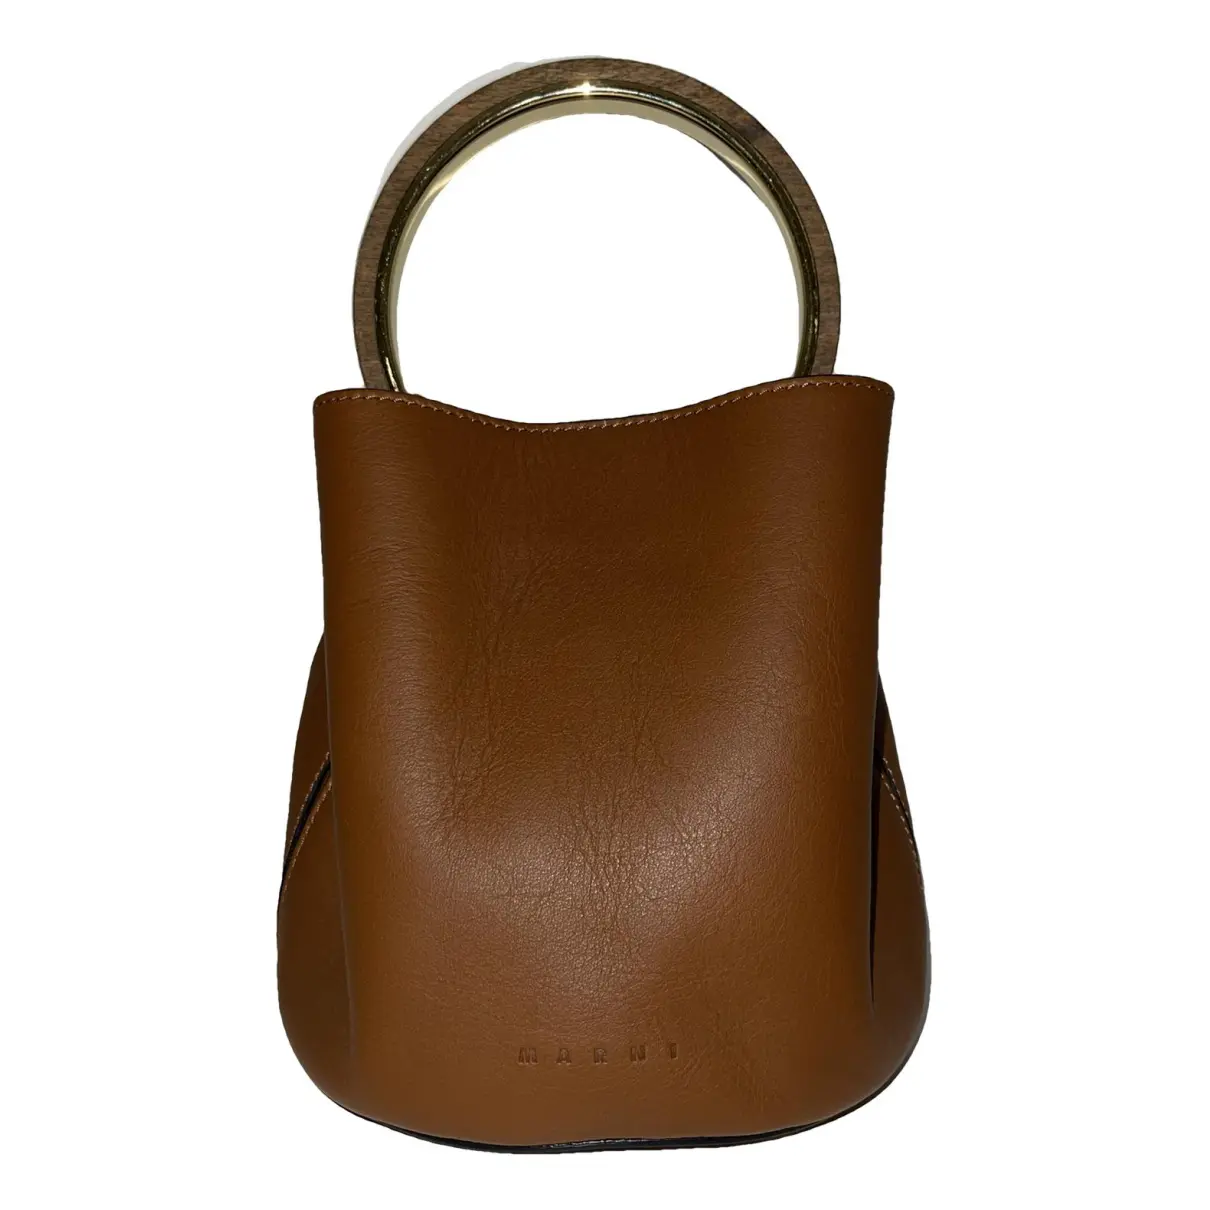 Pannier leather handbag